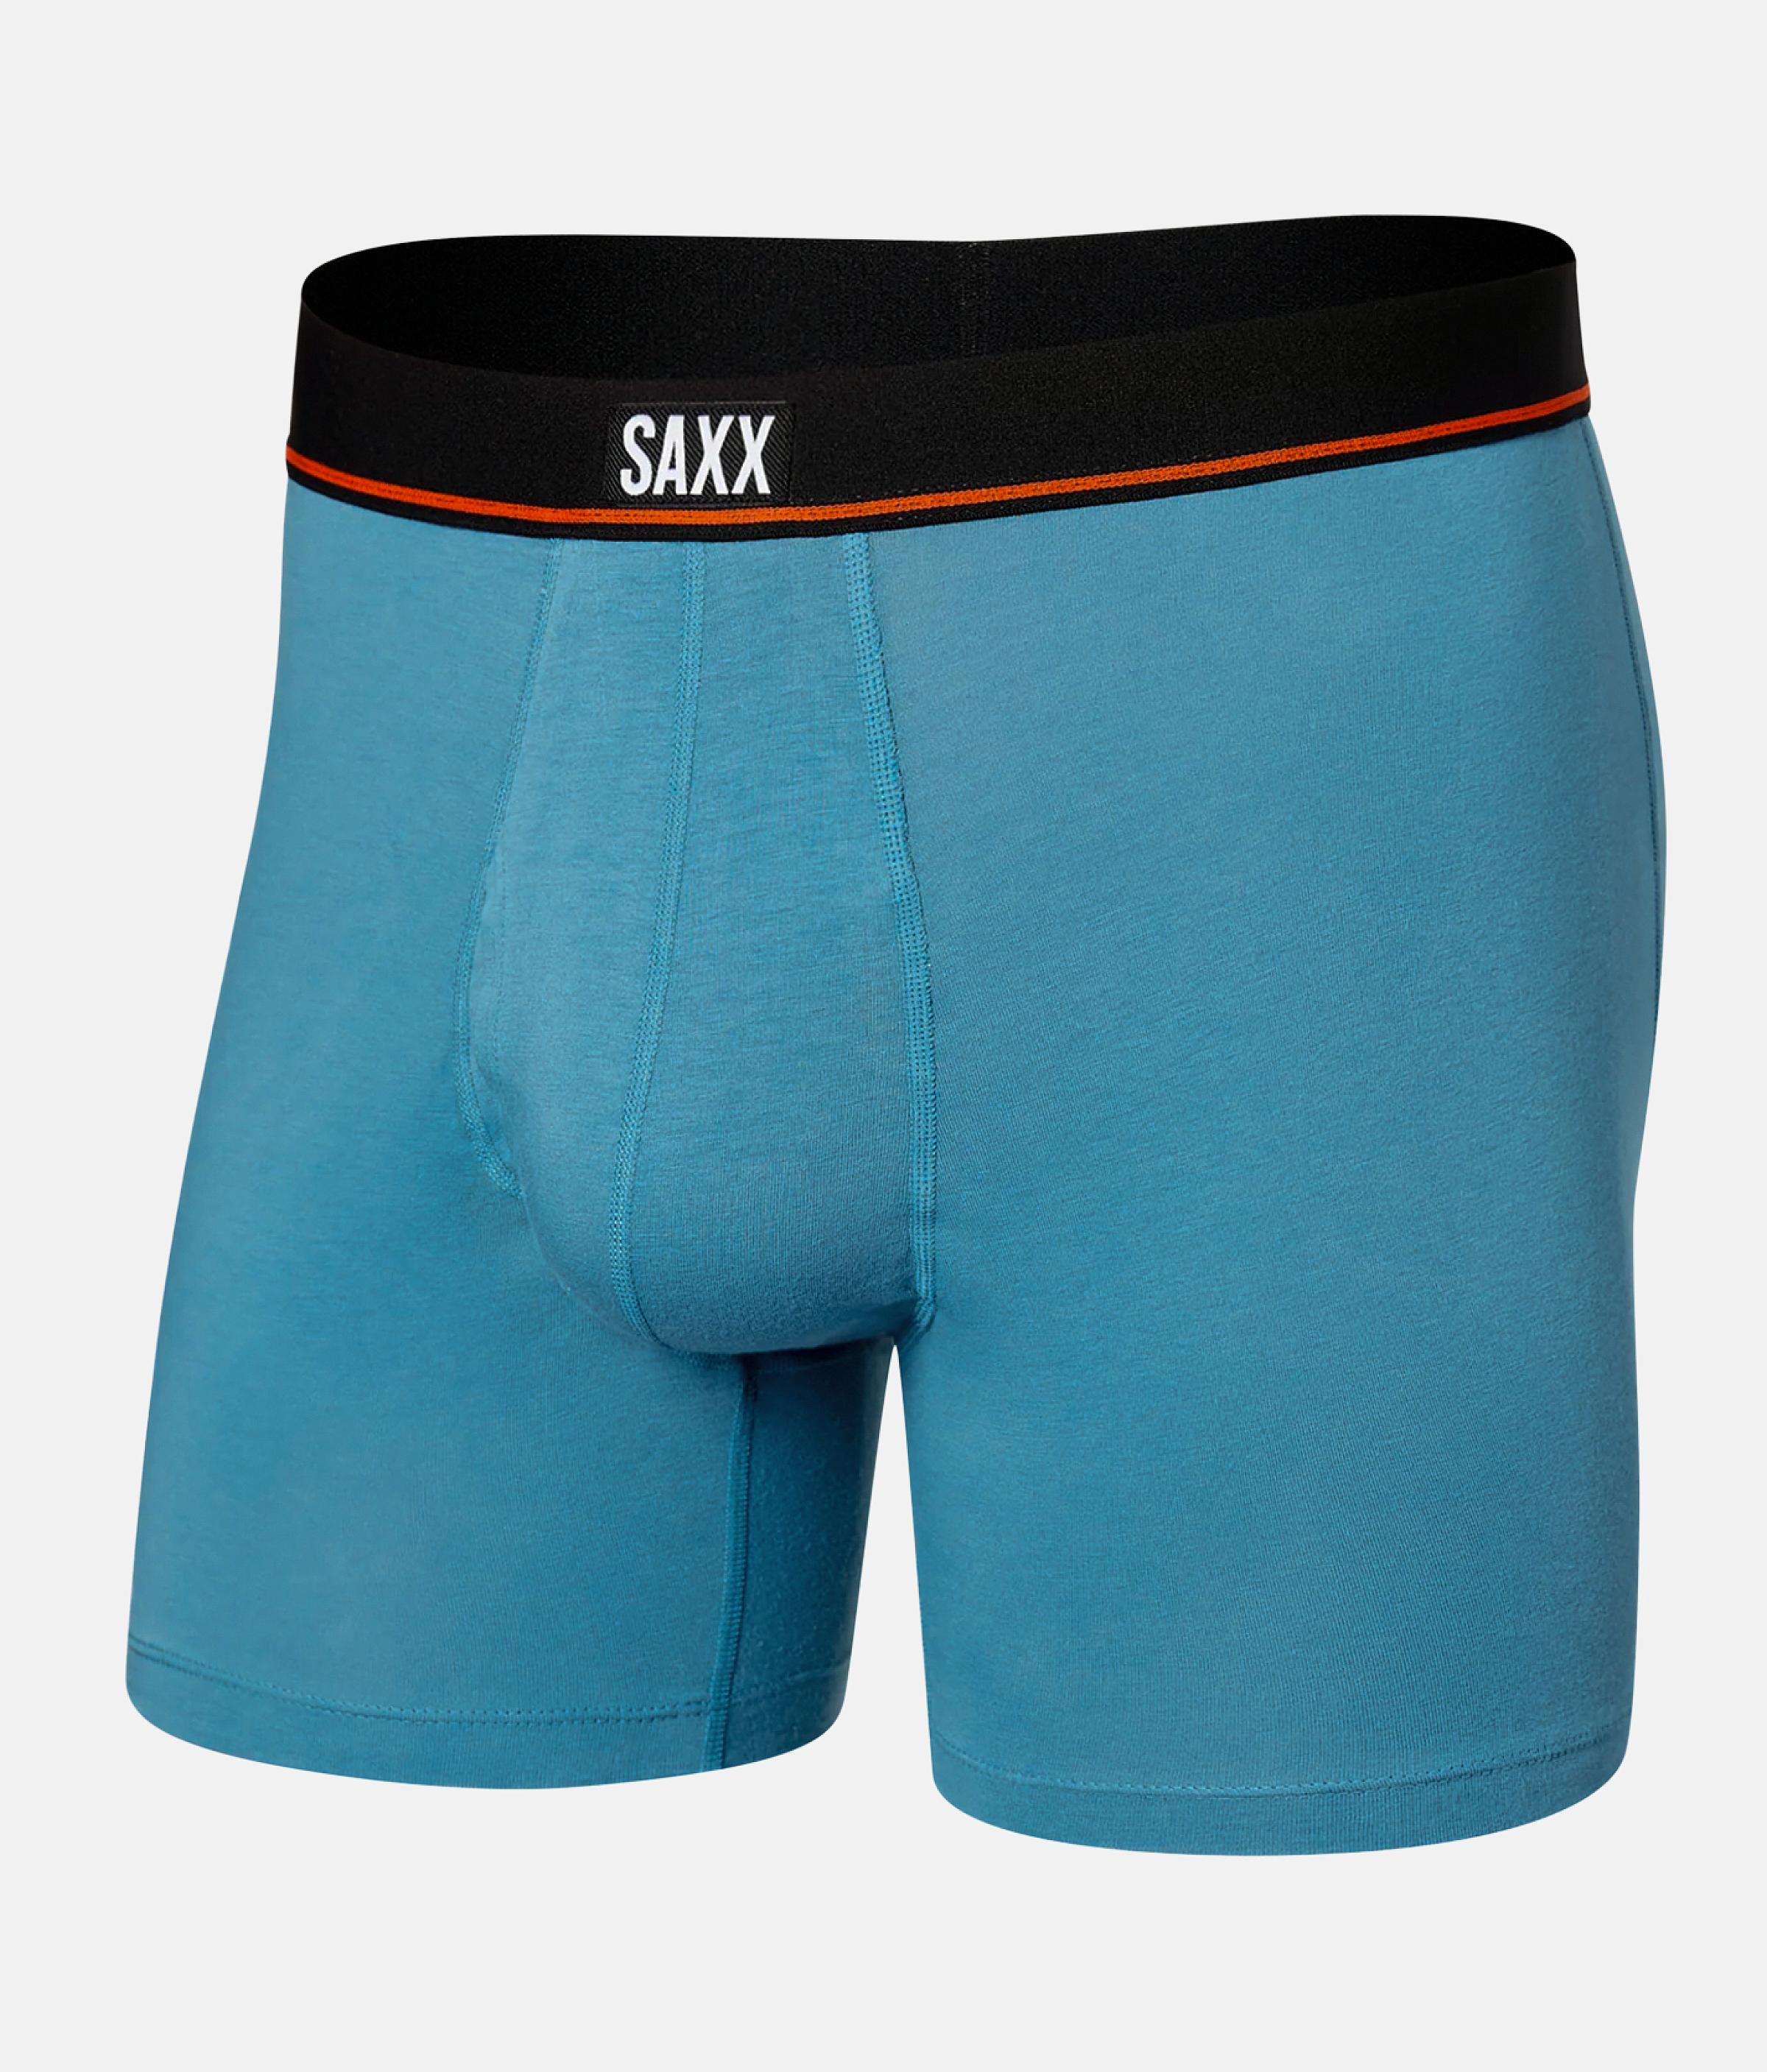 Saxx Underwear Co Non Stop Stretch Cotton Boxer Briefs In Blue For Men Lyst 7006